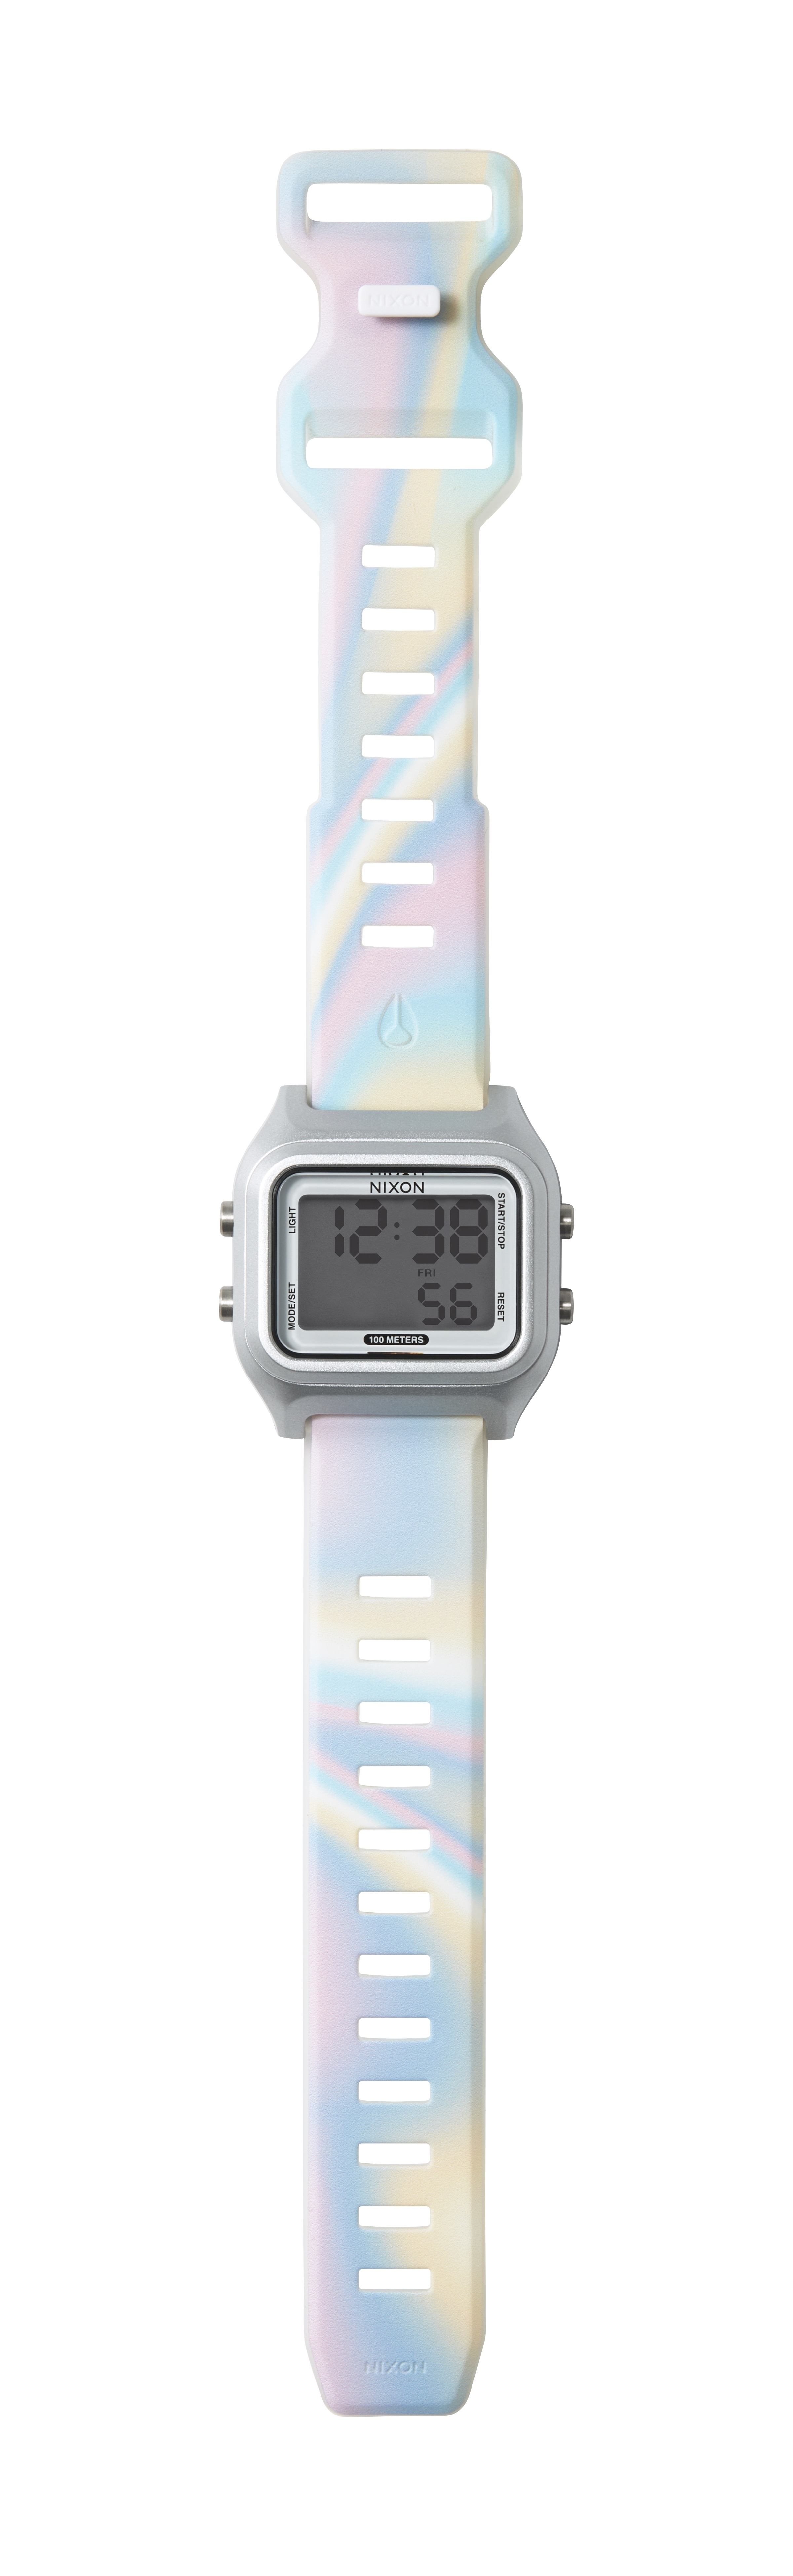 new nixon watch